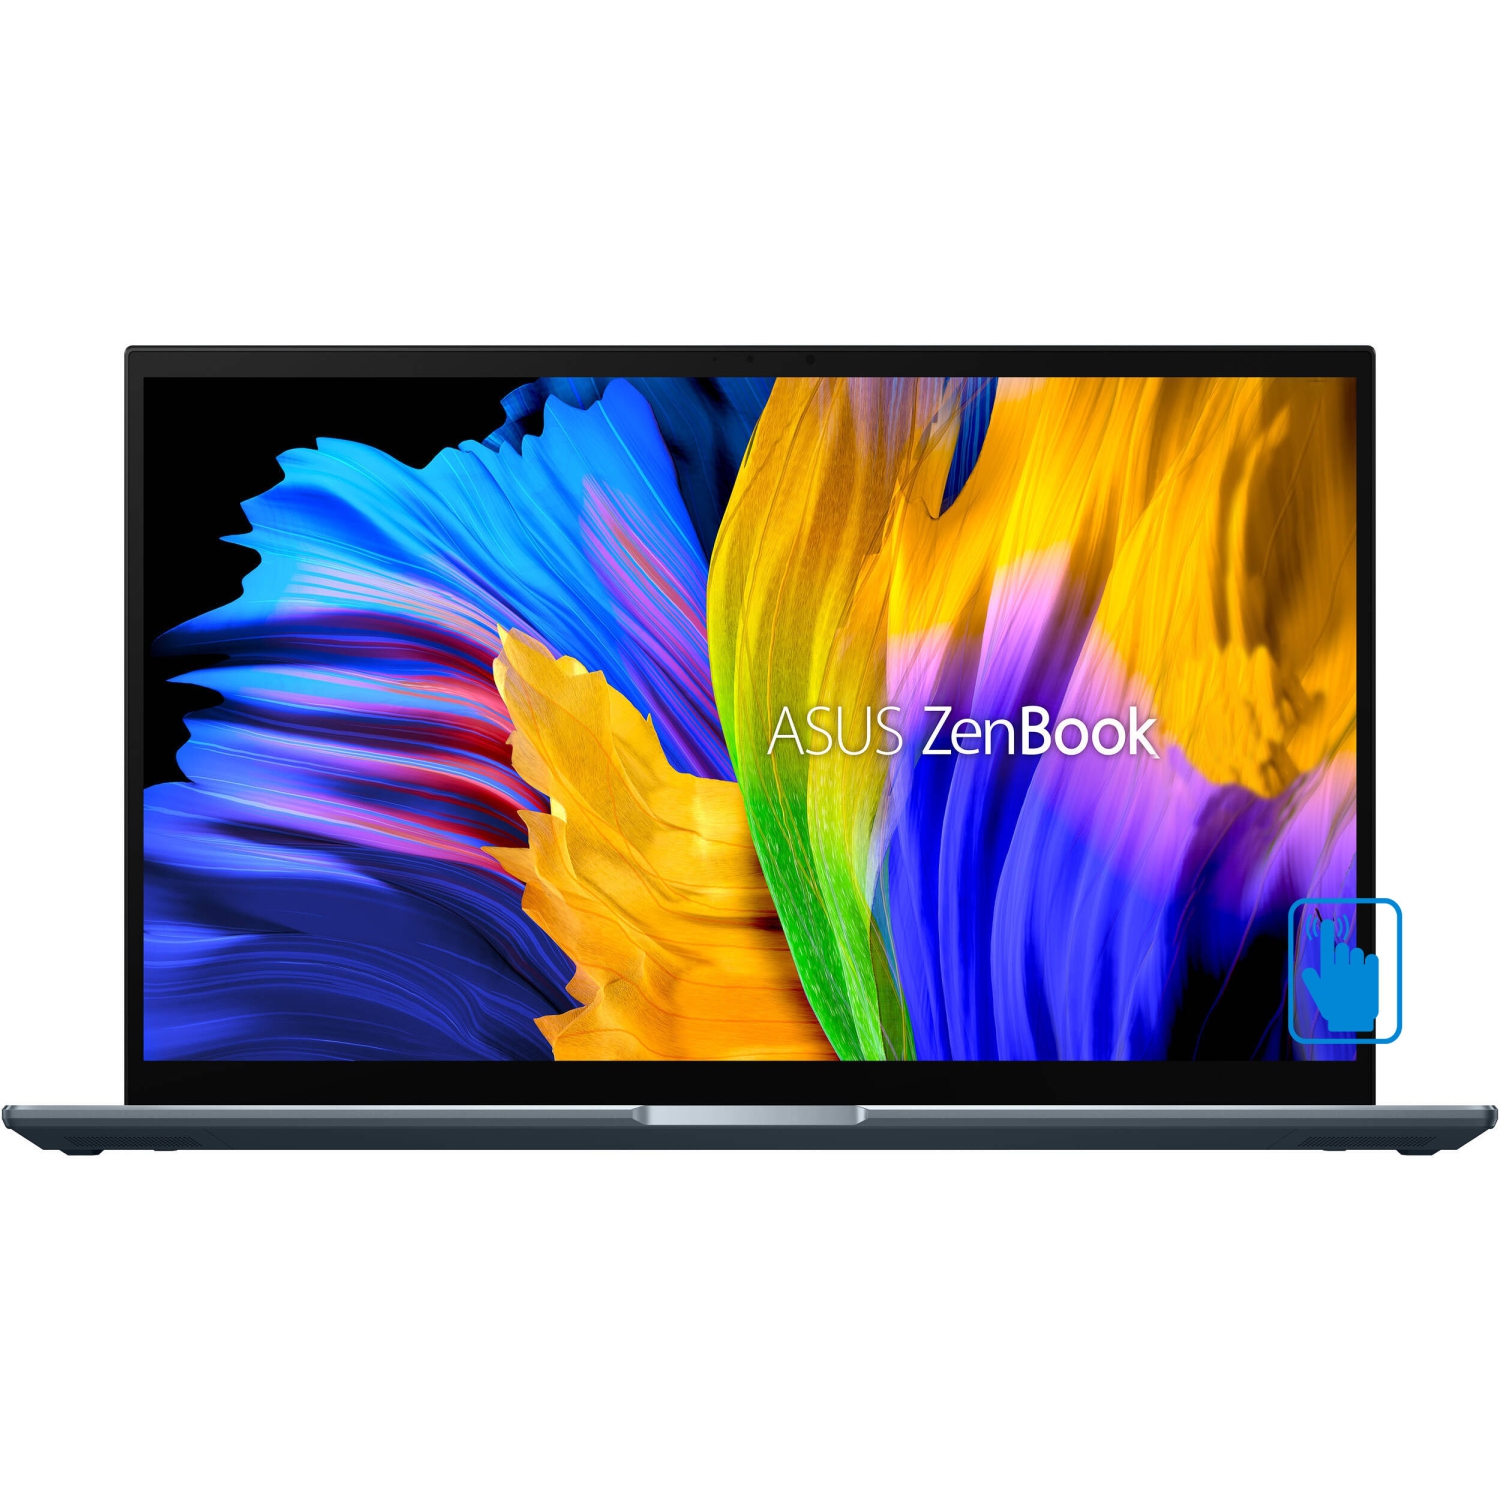 Custom ASUS ZenBook Pro 15 Laptop (AMD Ryzen 9 5900HX, 16GB RAM, 2TB PCIe SSD, GeForce RTX 3050 Ti, 15.6" Touch Win 11 Pro)